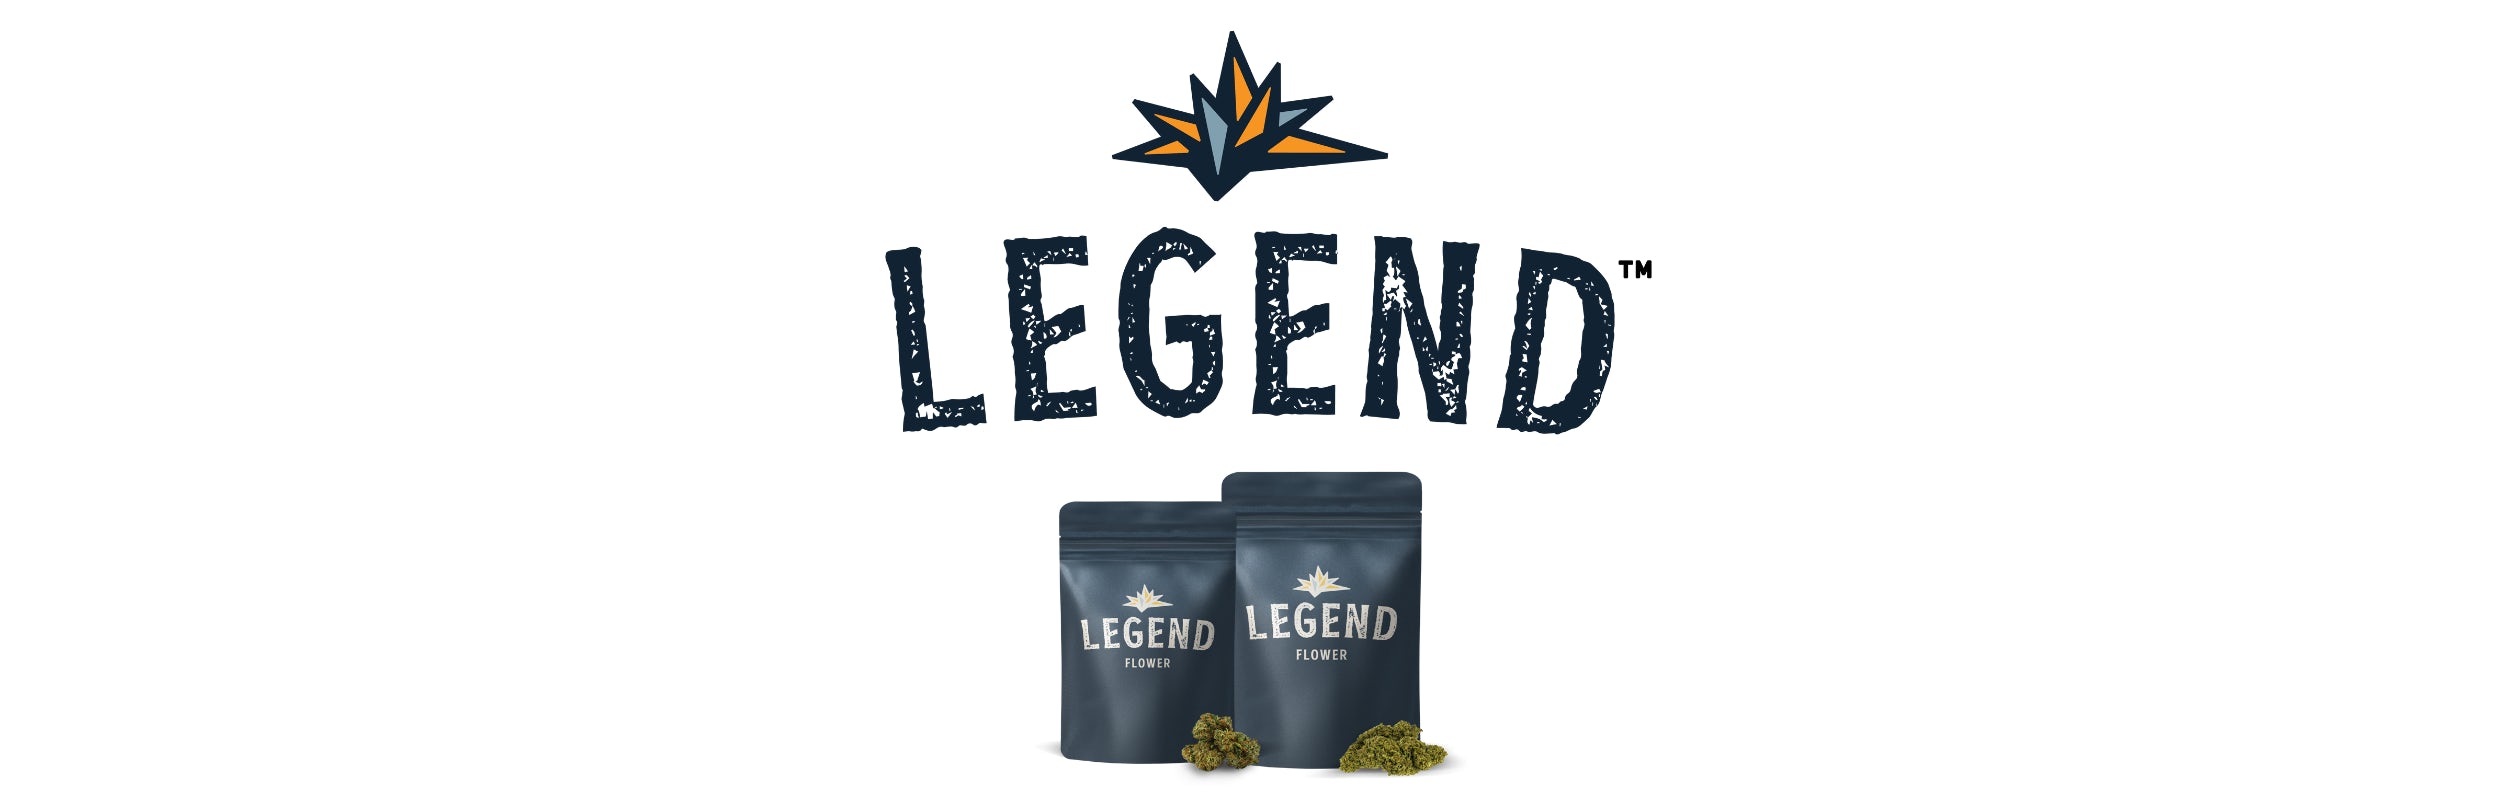 Legend Cannabis banner